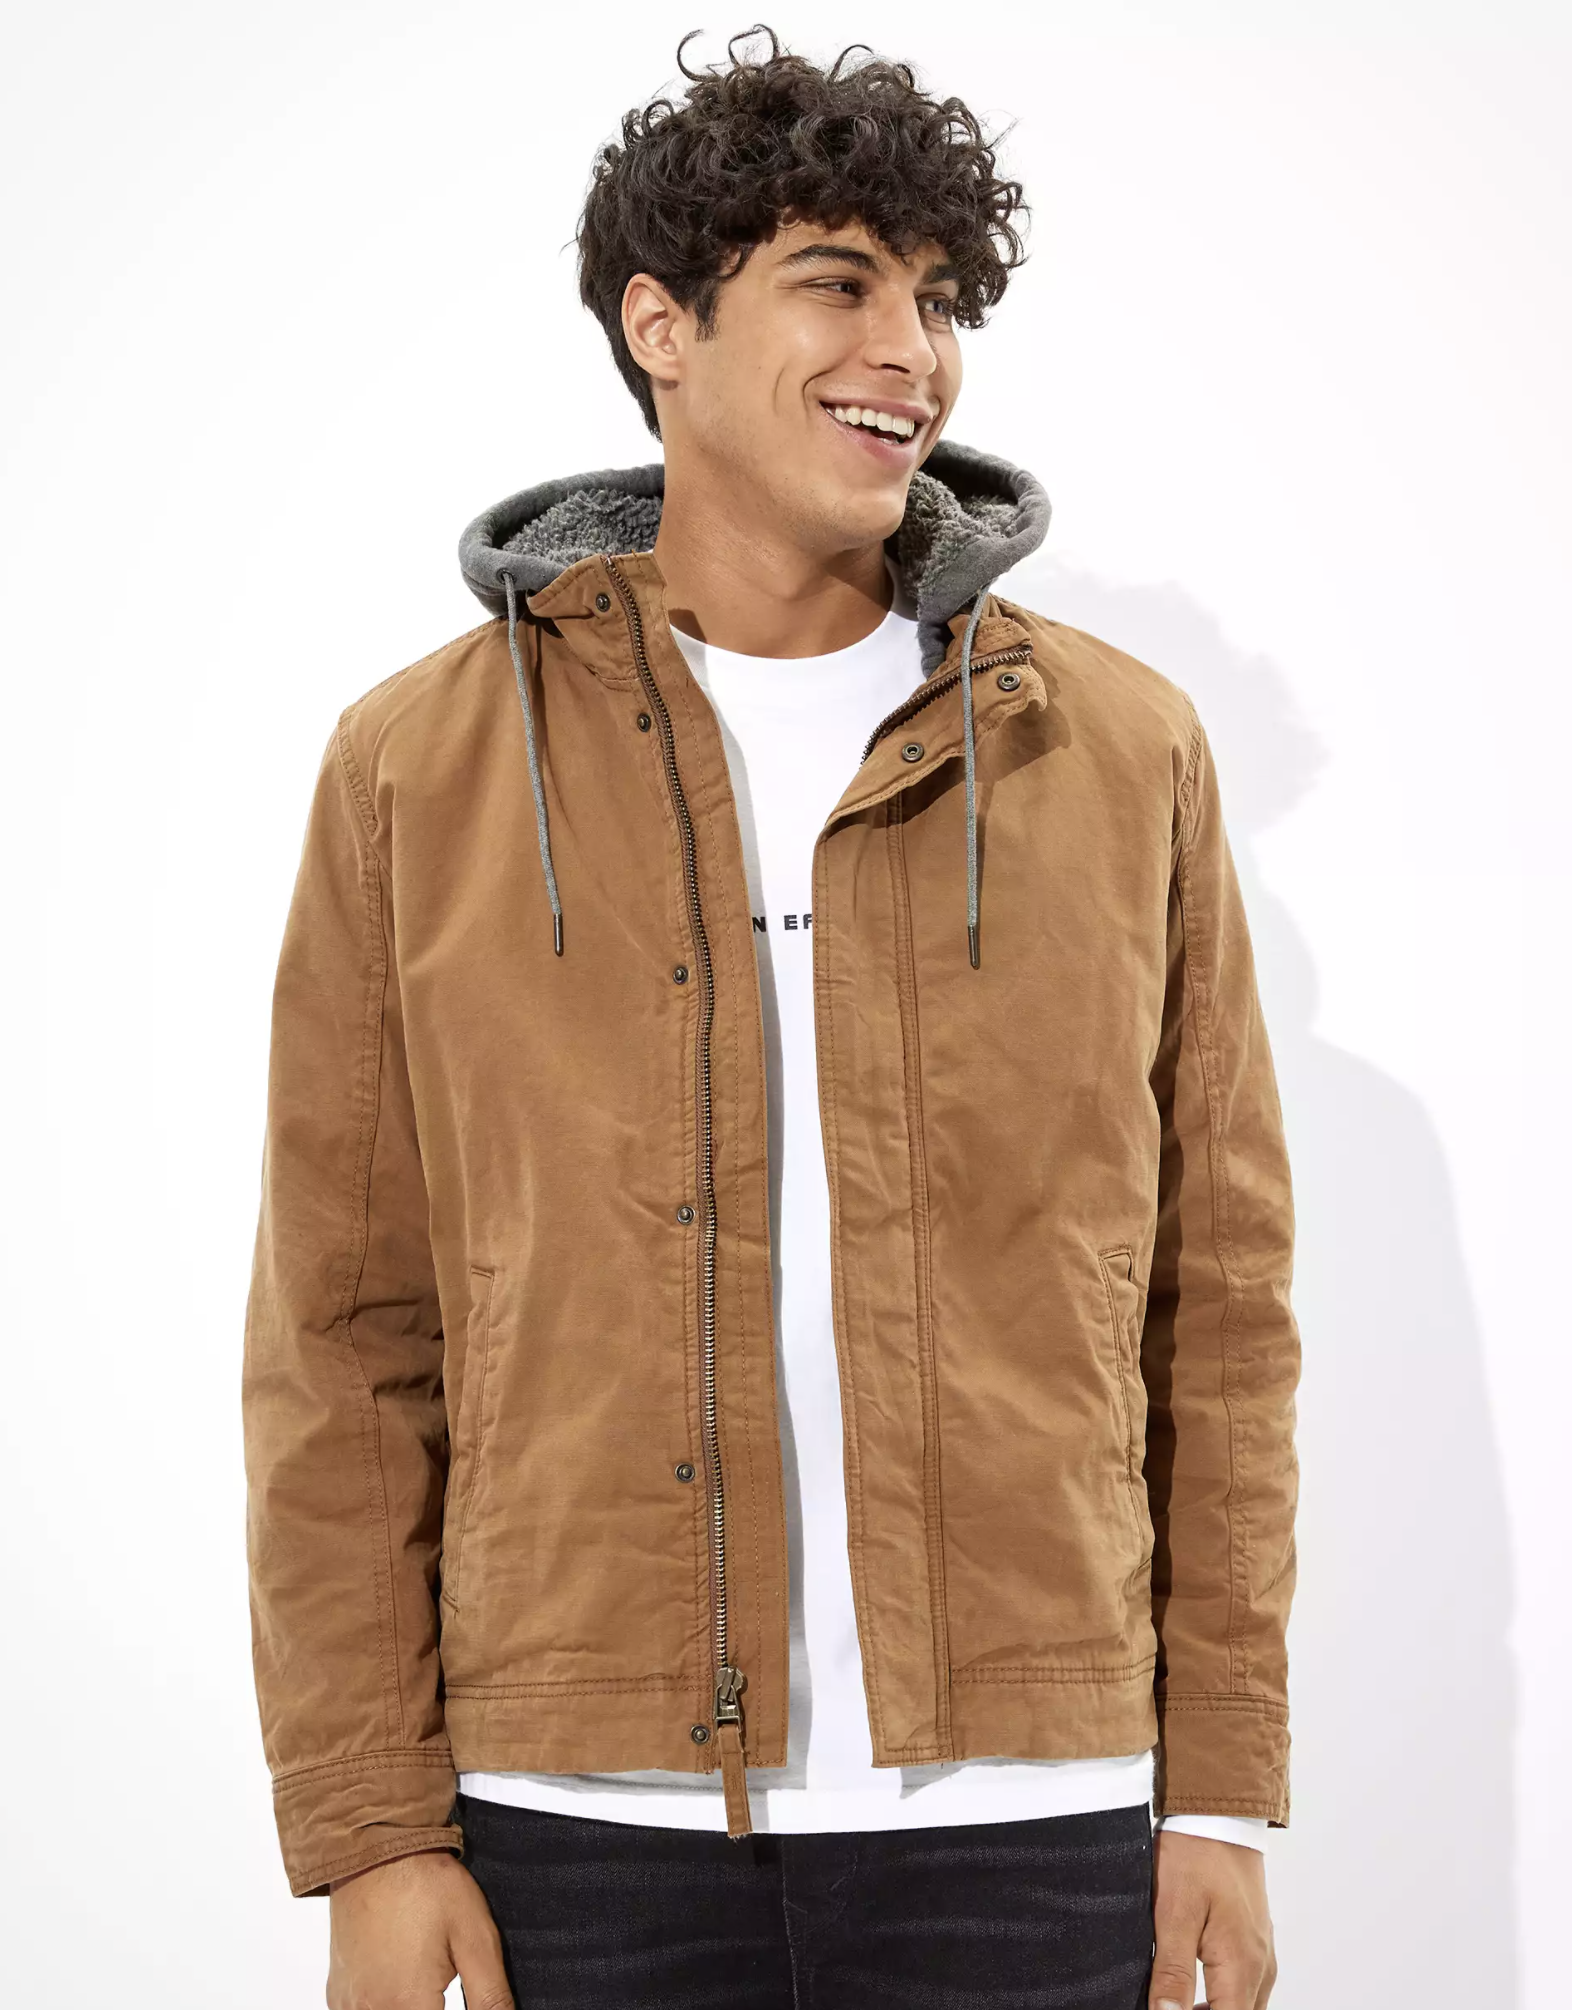 A model wearing the jacket